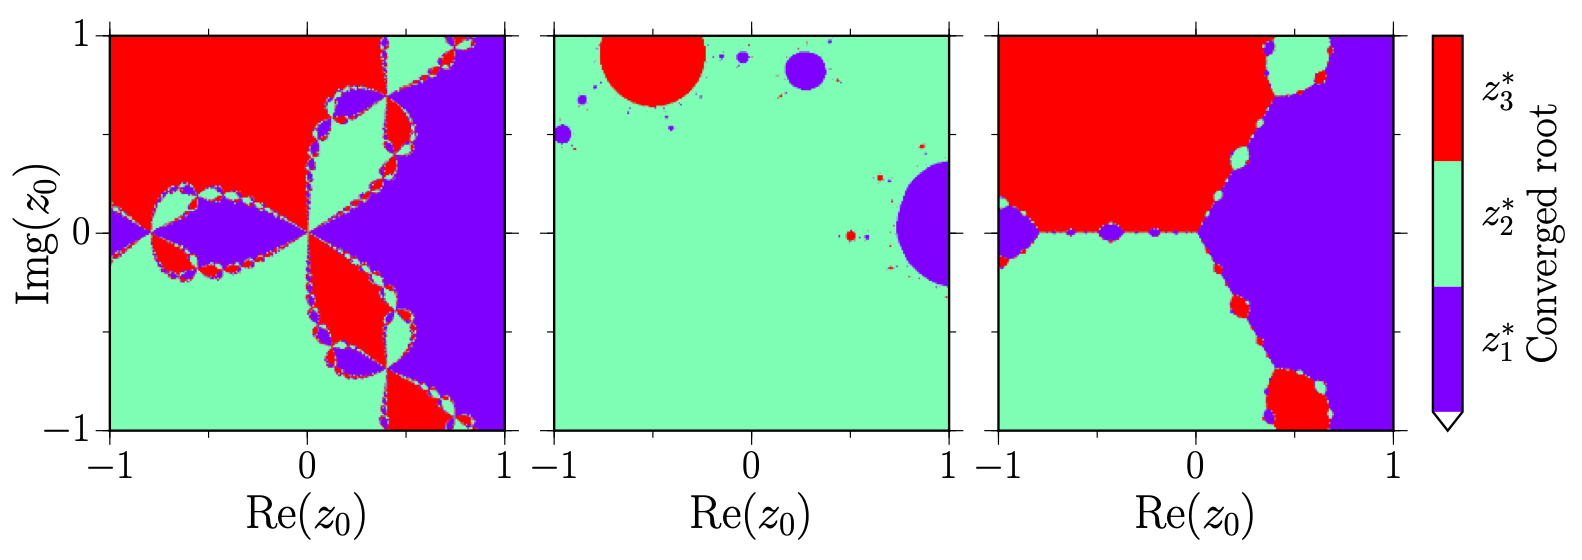 Newton's fractal plots using different numerical algorithms